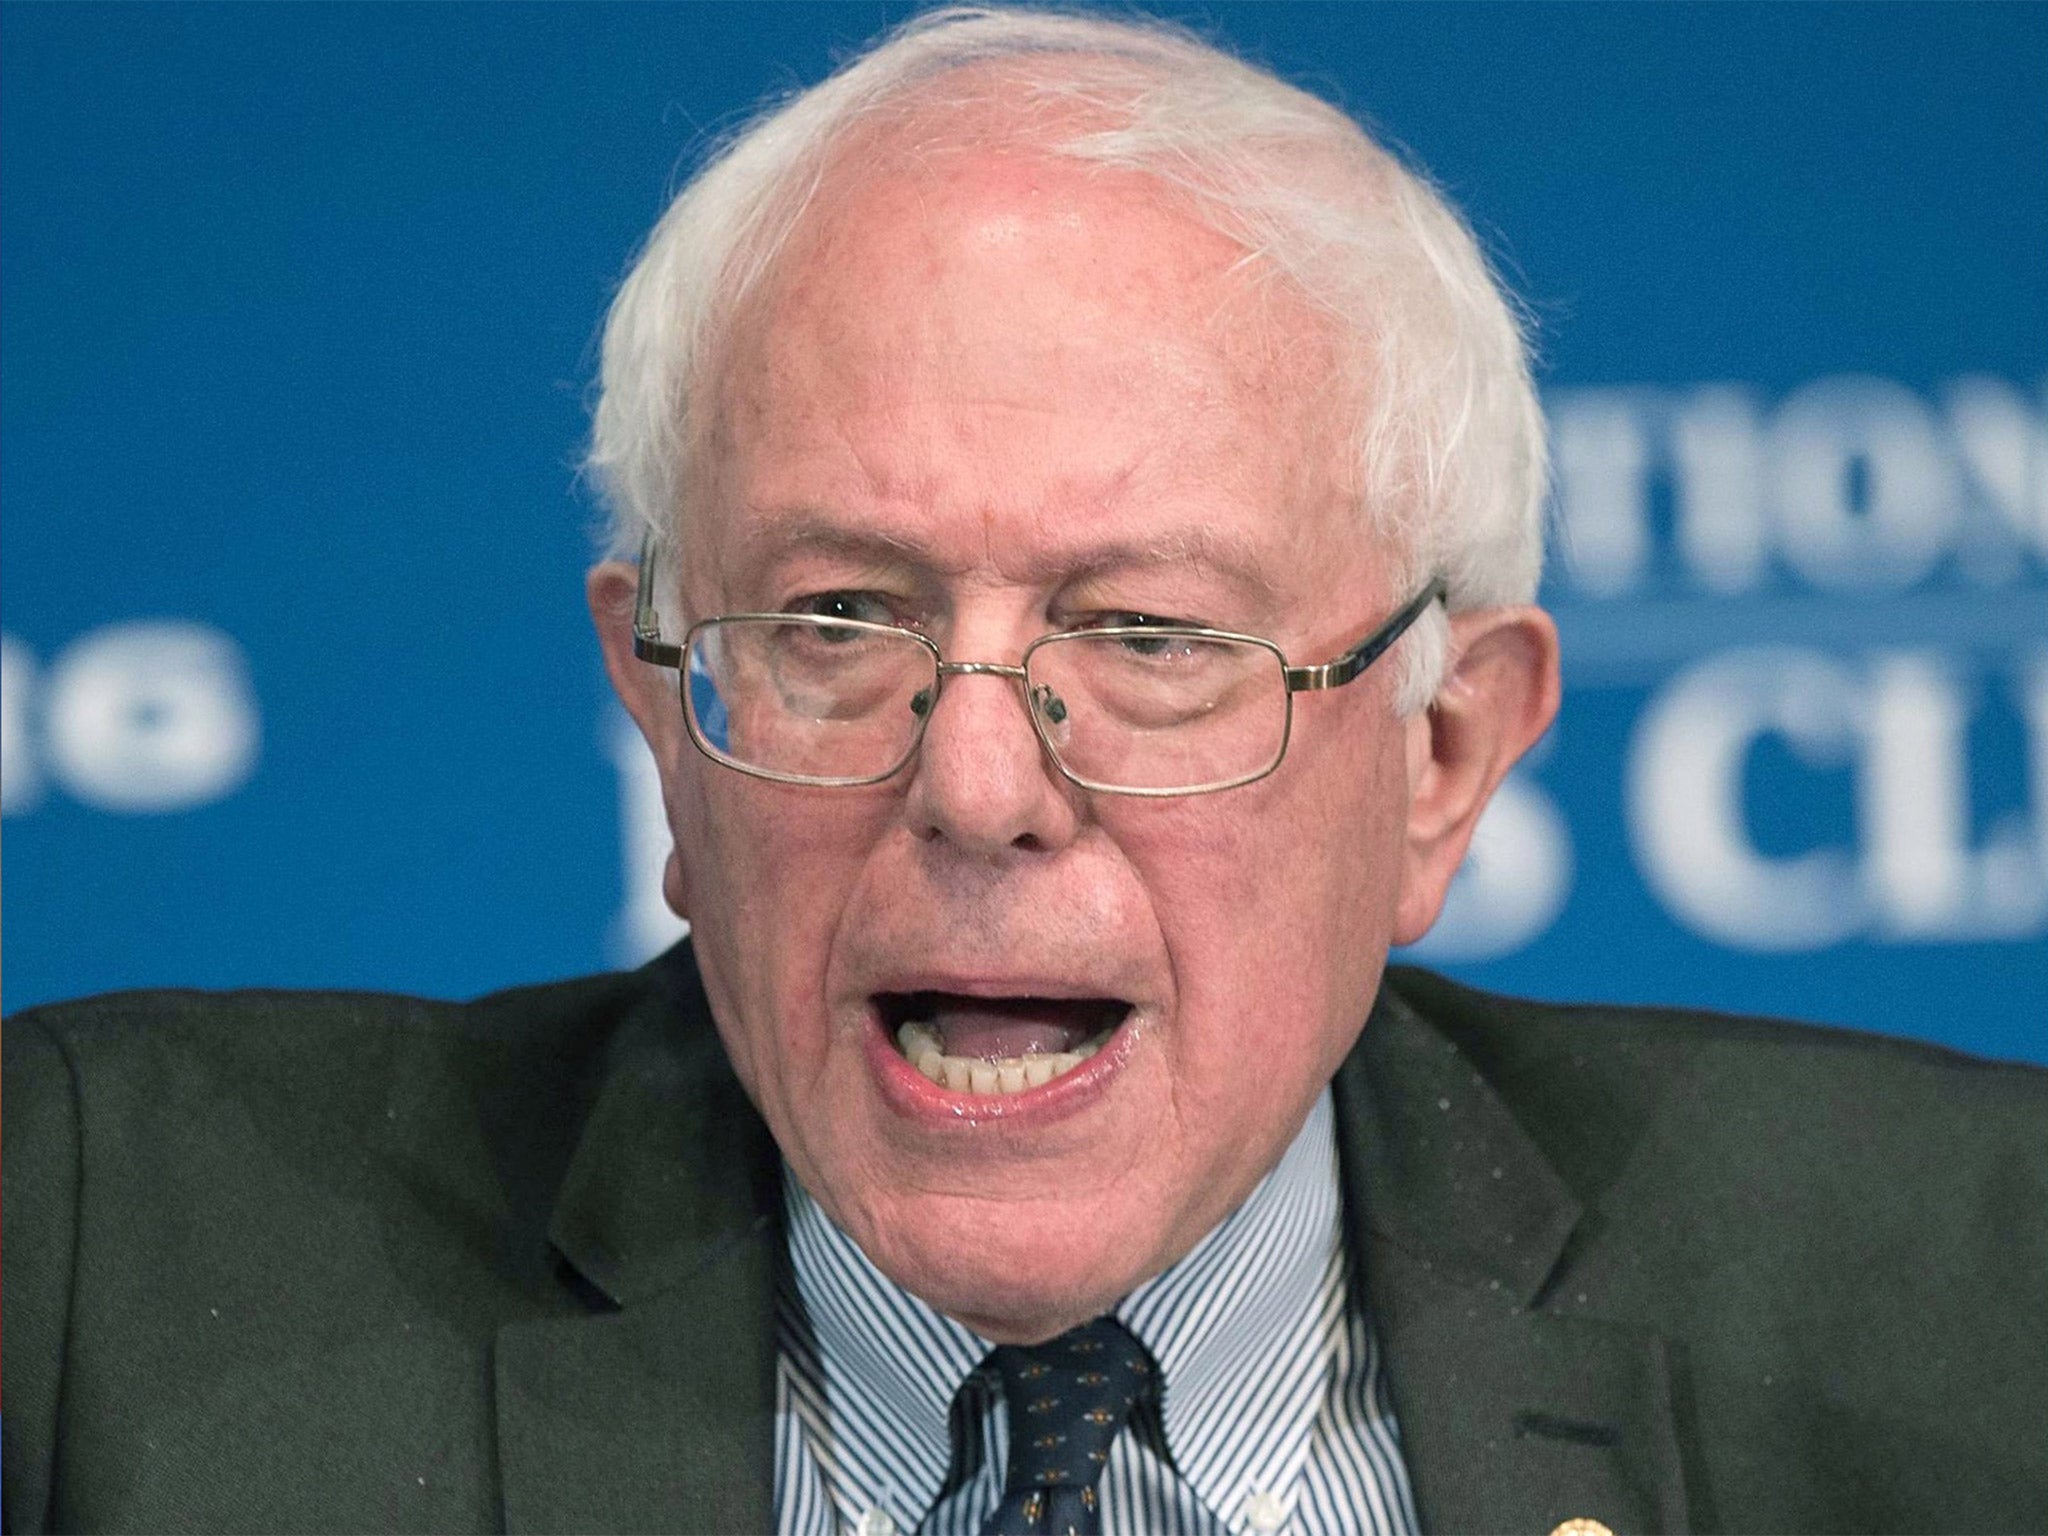 Bernie Sanders needs to broaden his appeal if he is to win the nomination